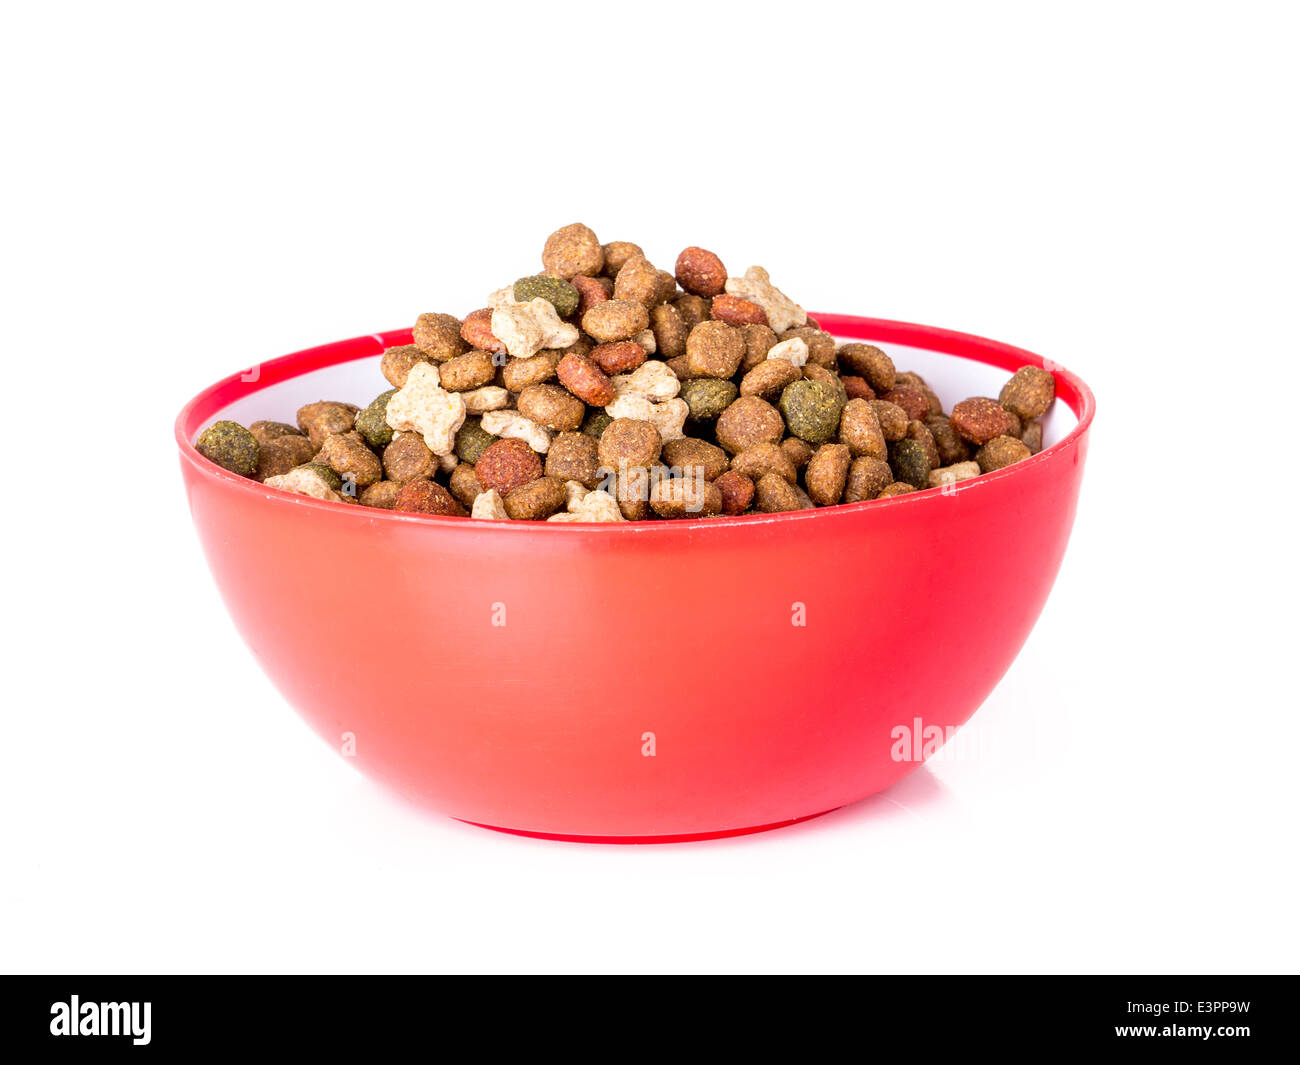 Red bowl full of dog food shot on white Stock Photo